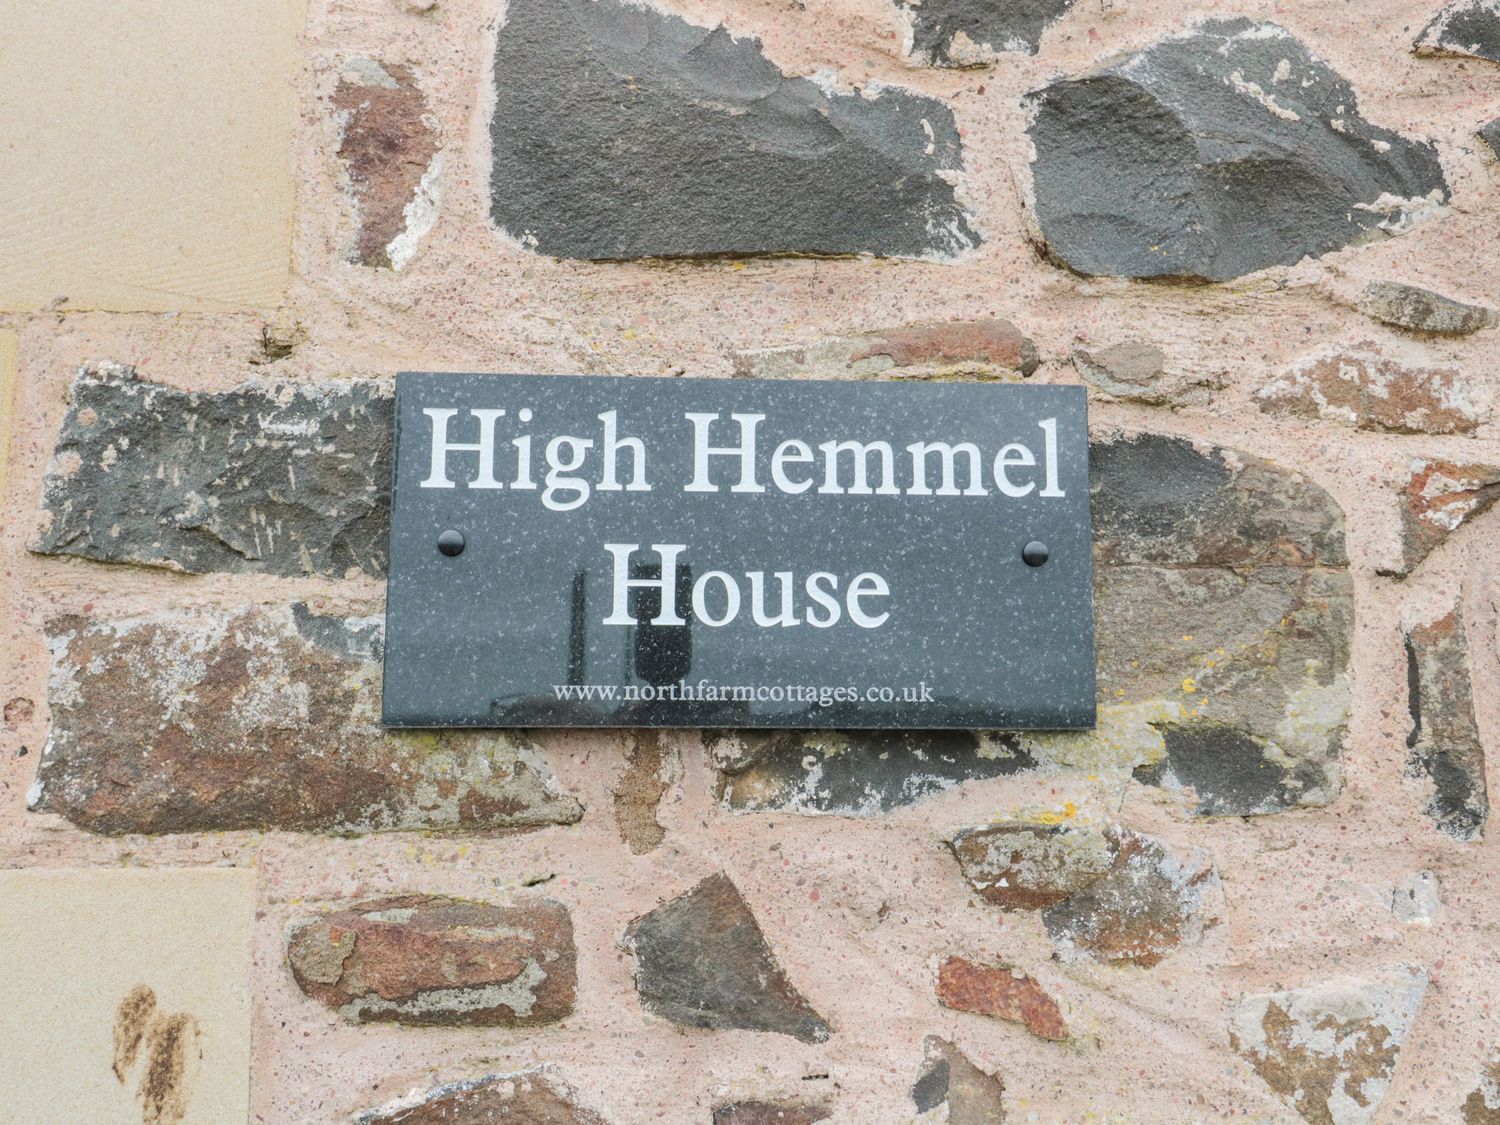 High Hemmel House, Northumberland